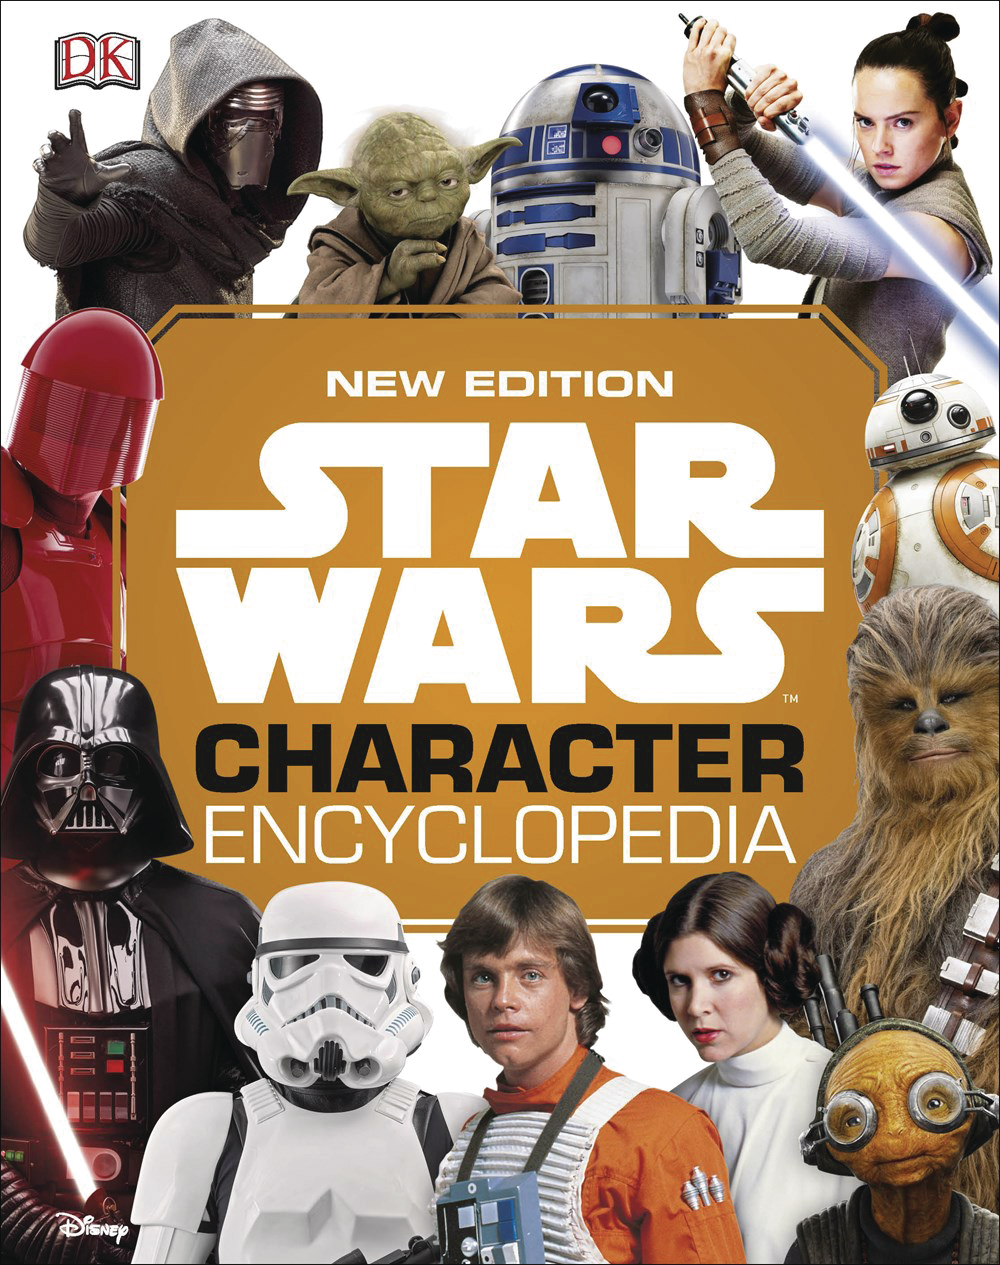 Star Wars Character Encyclopedia Hardcover New Edition